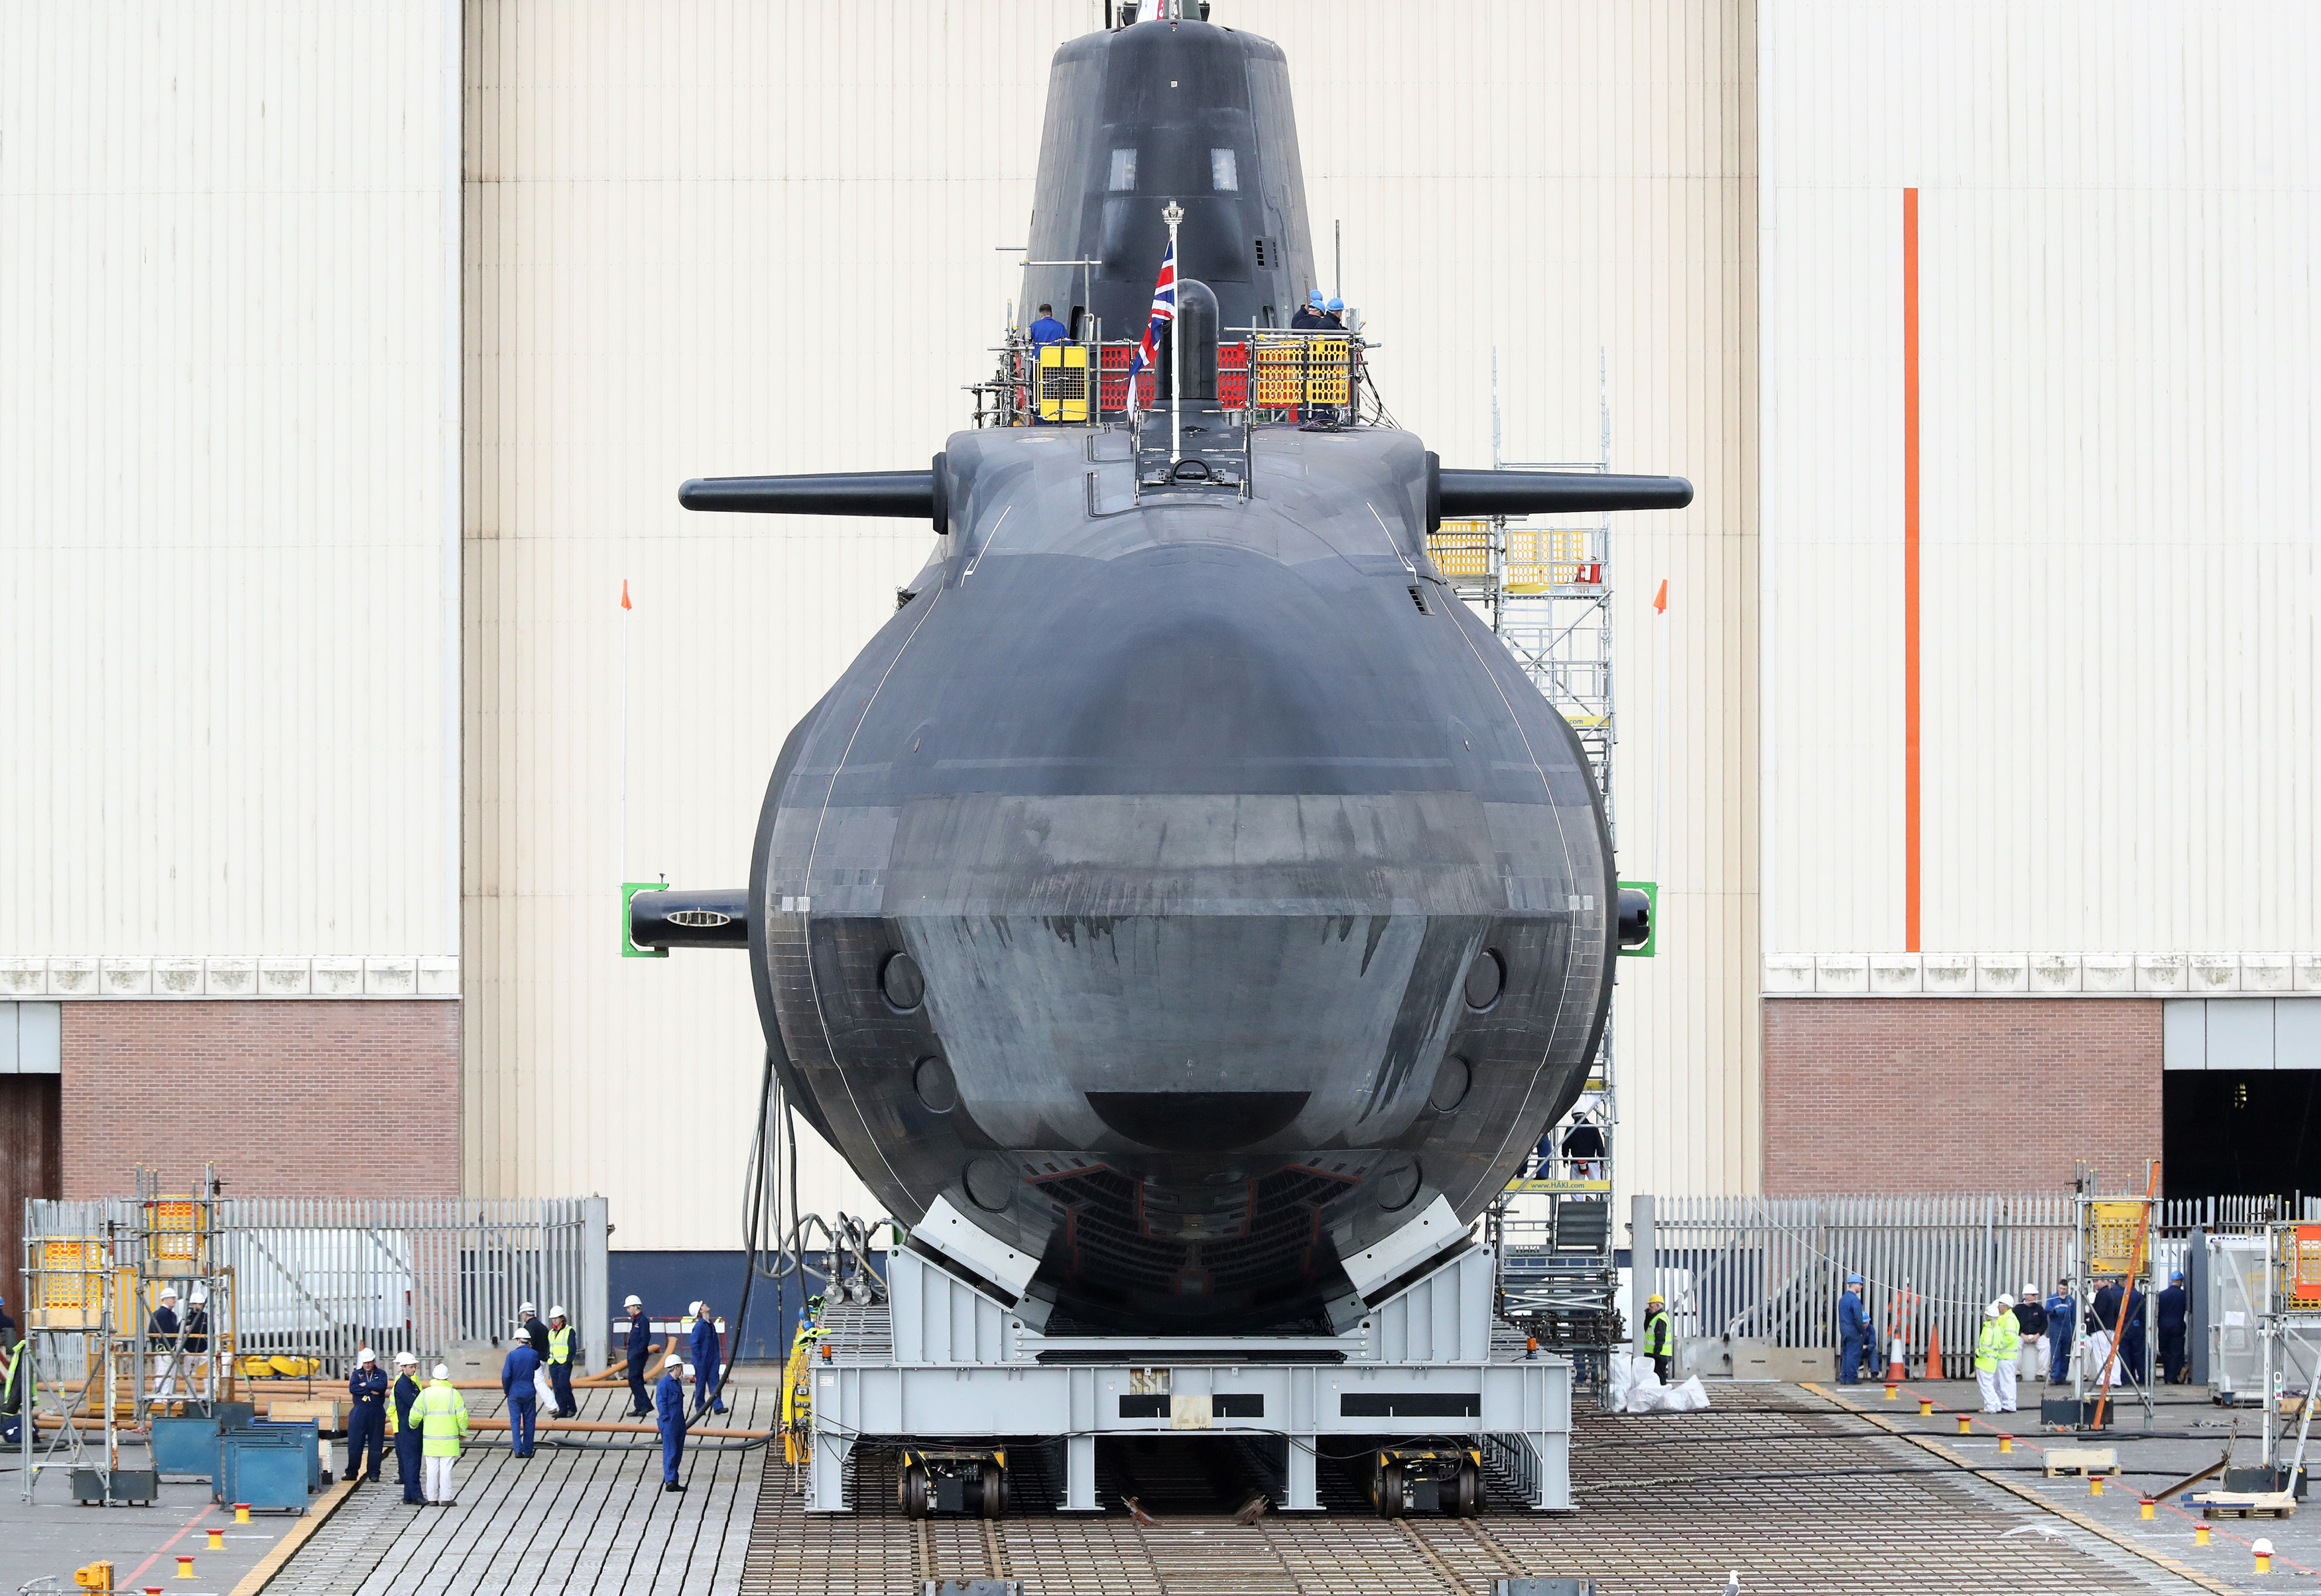 The new fourth Astute-class nuclear-powered submarine, HMS Audacious